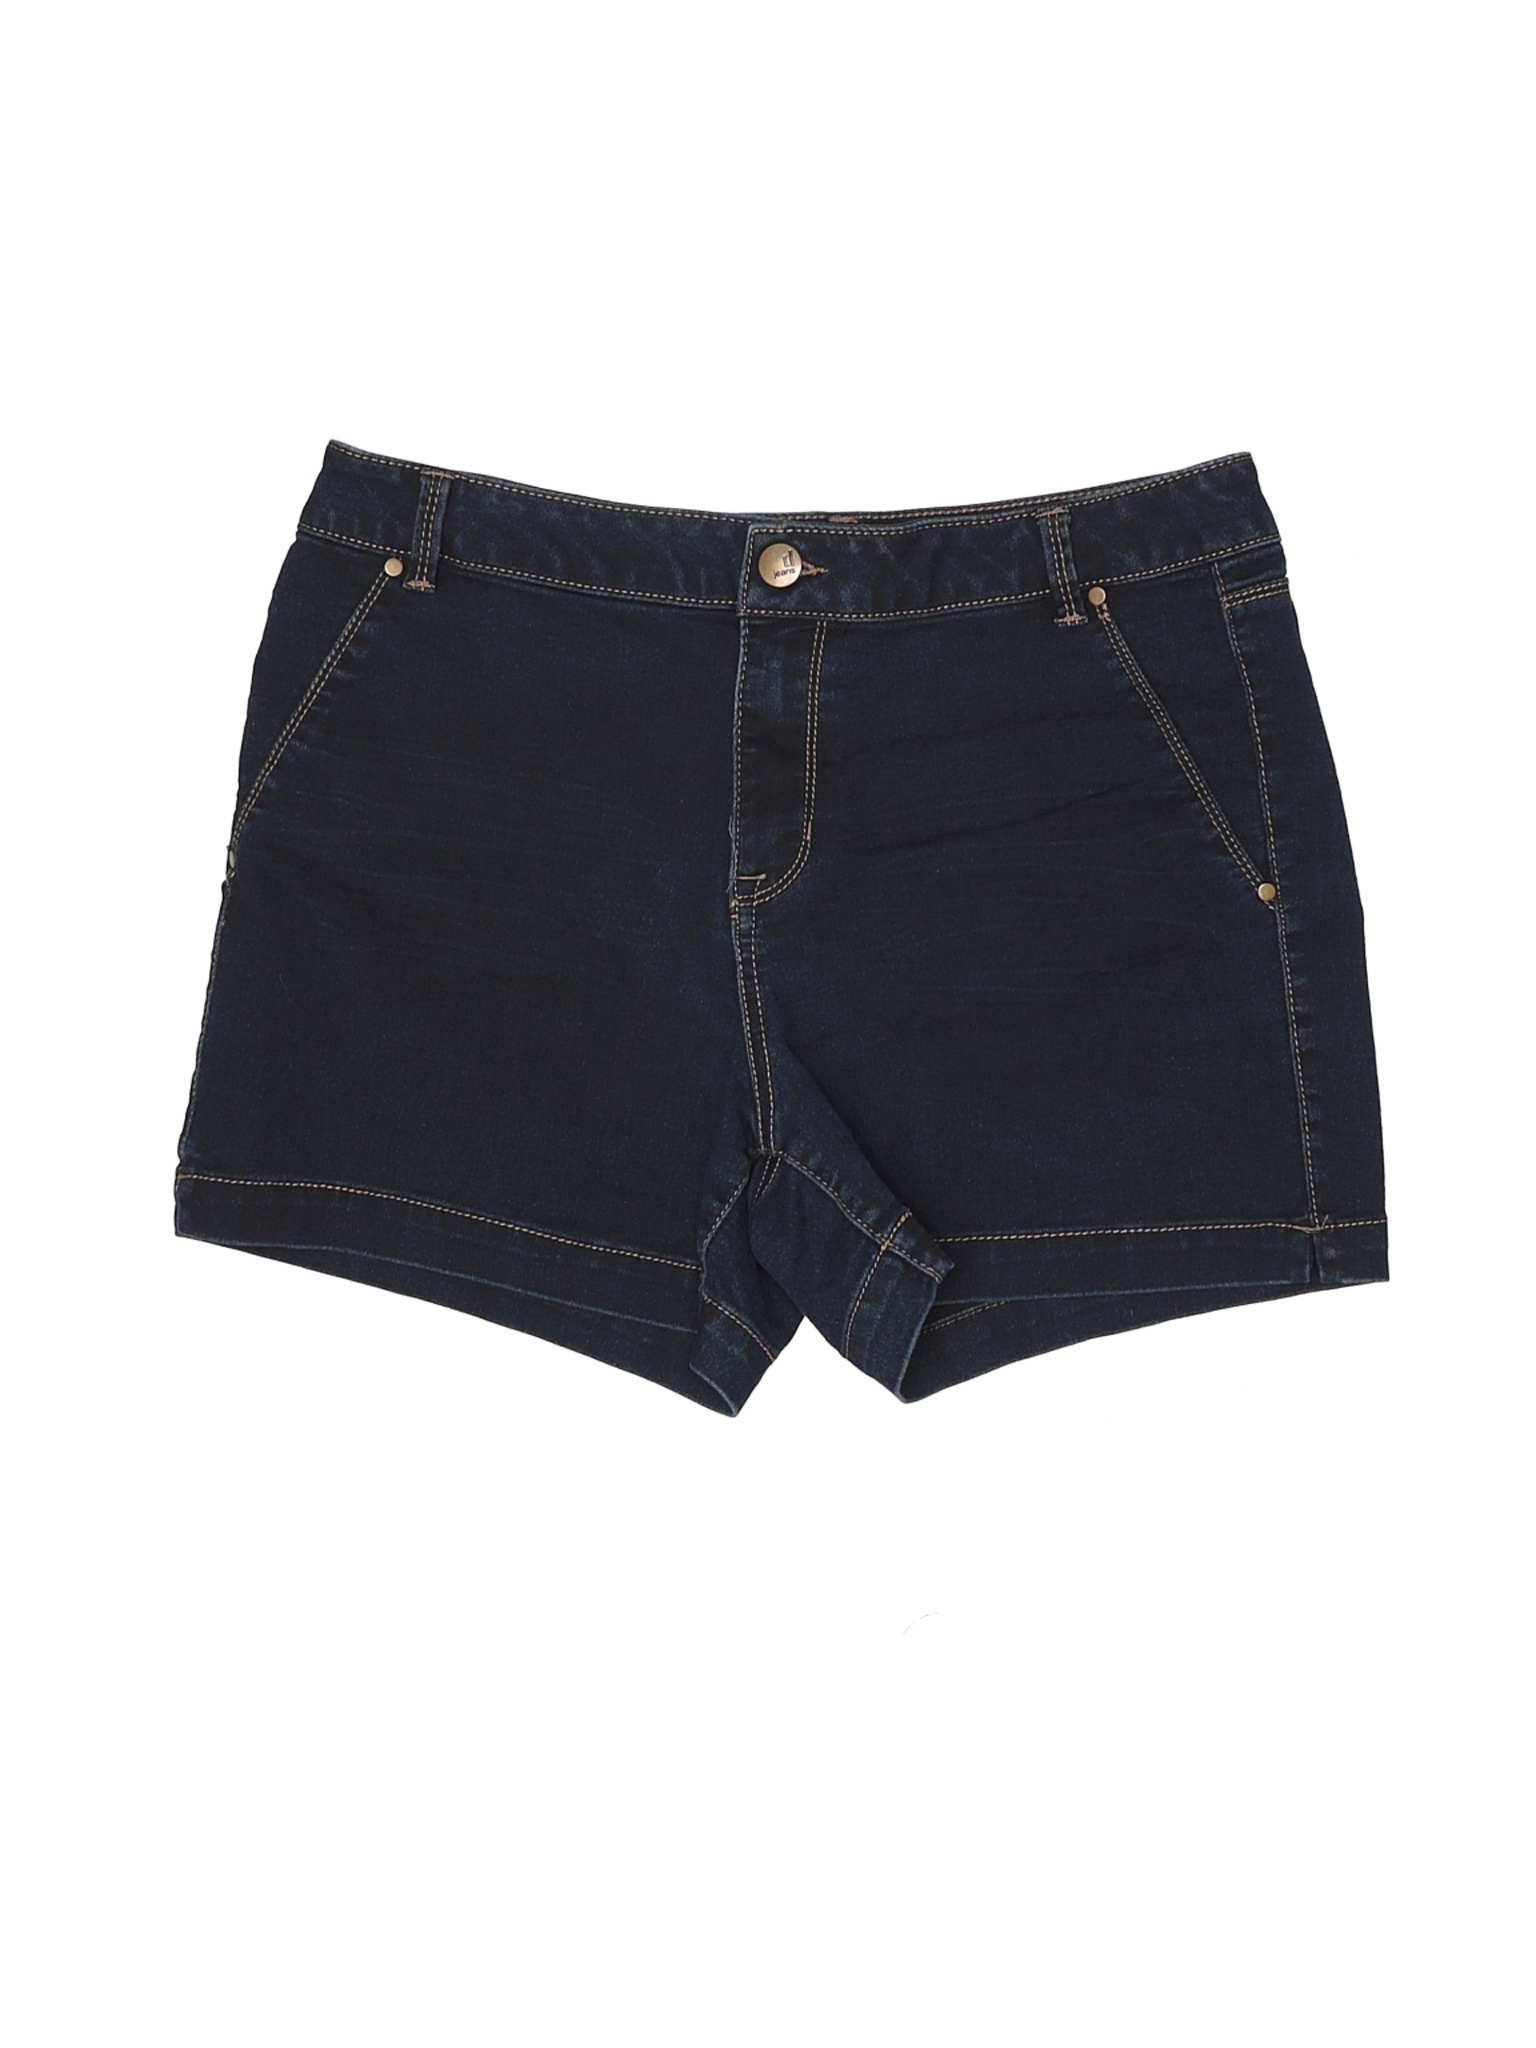 D. jeans Women Black Denim Shorts 14 | eBay